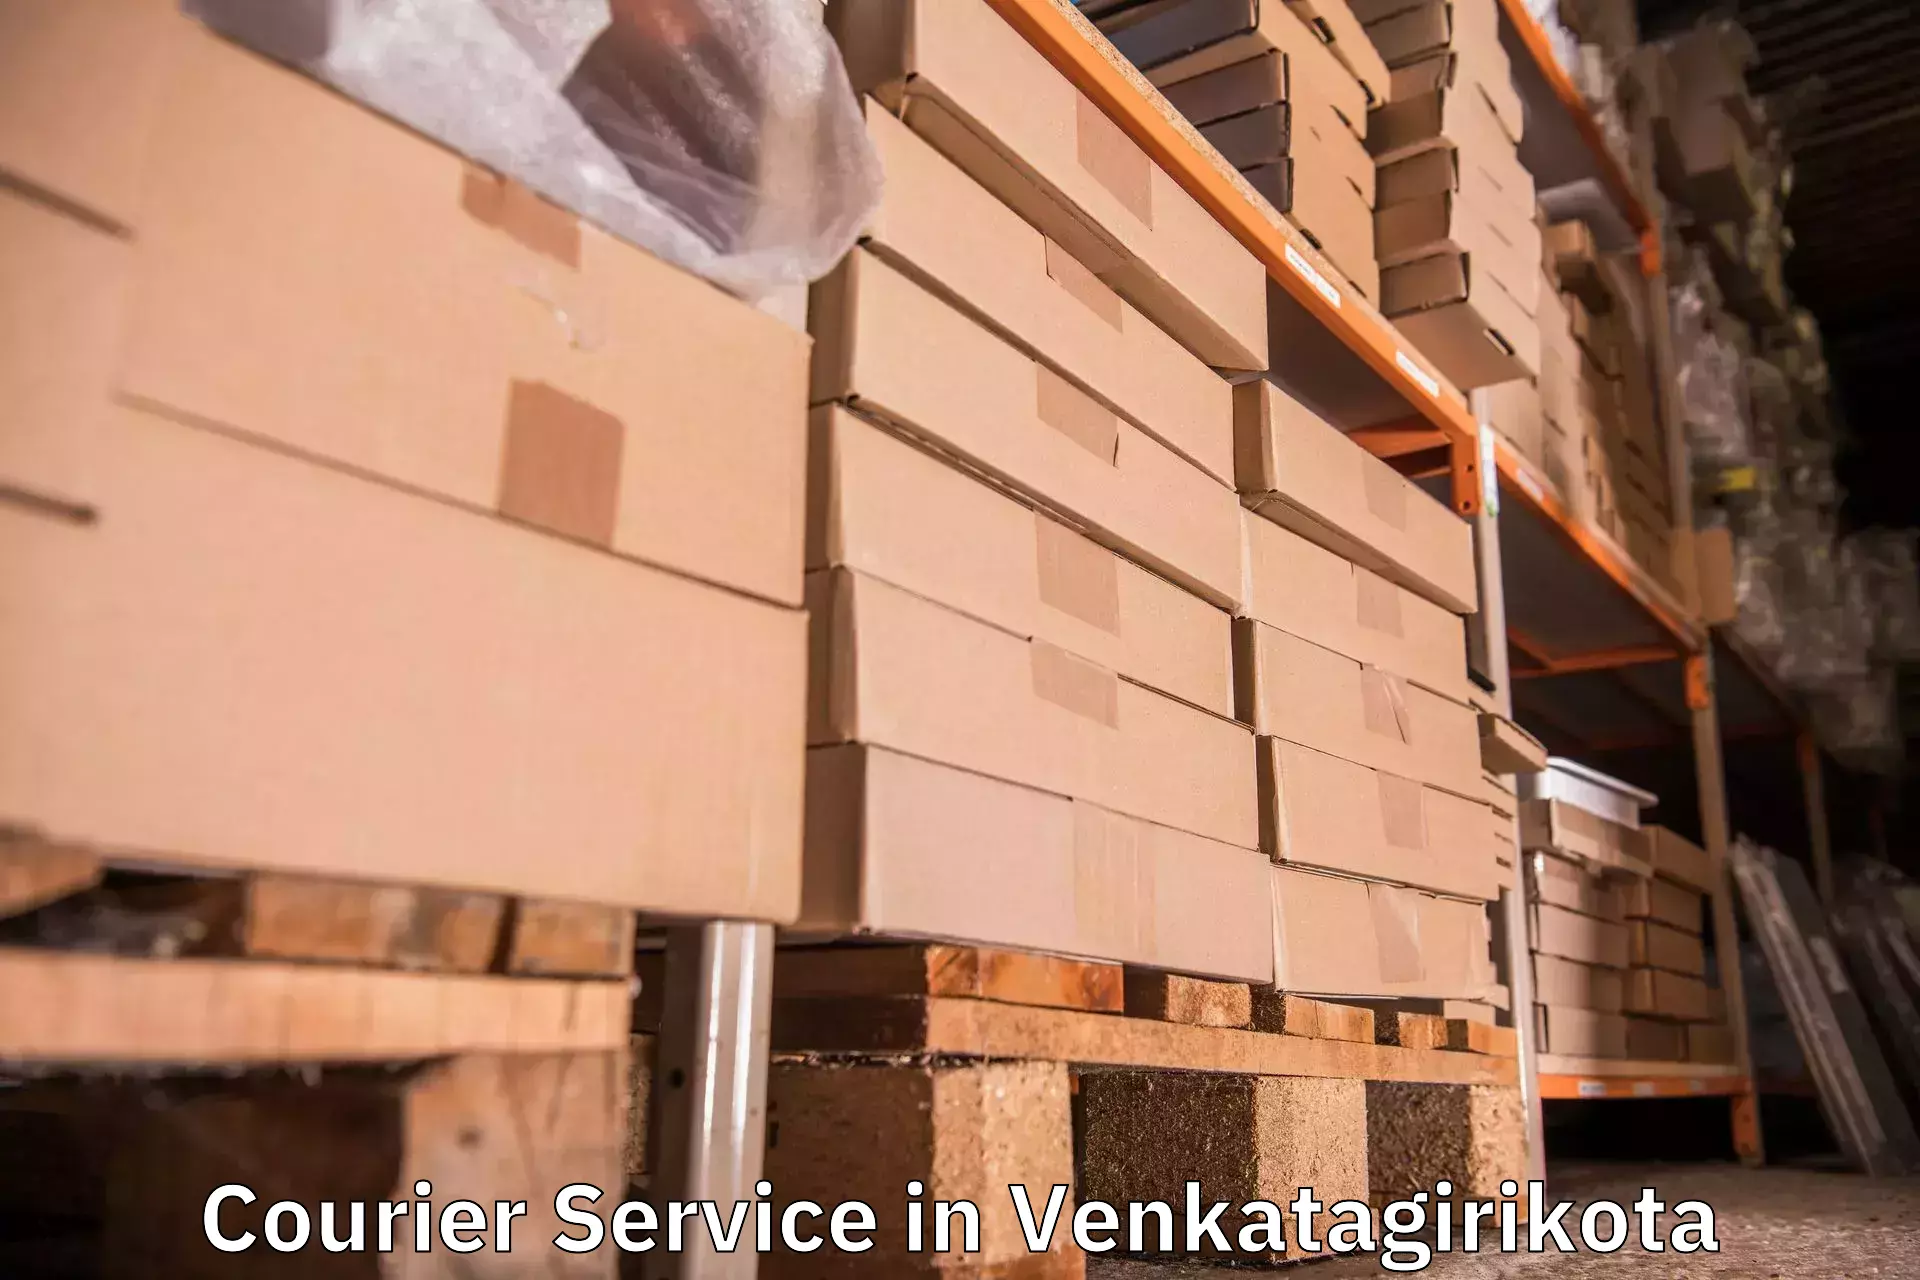 Sustainable shipping practices in Venkatagirikota